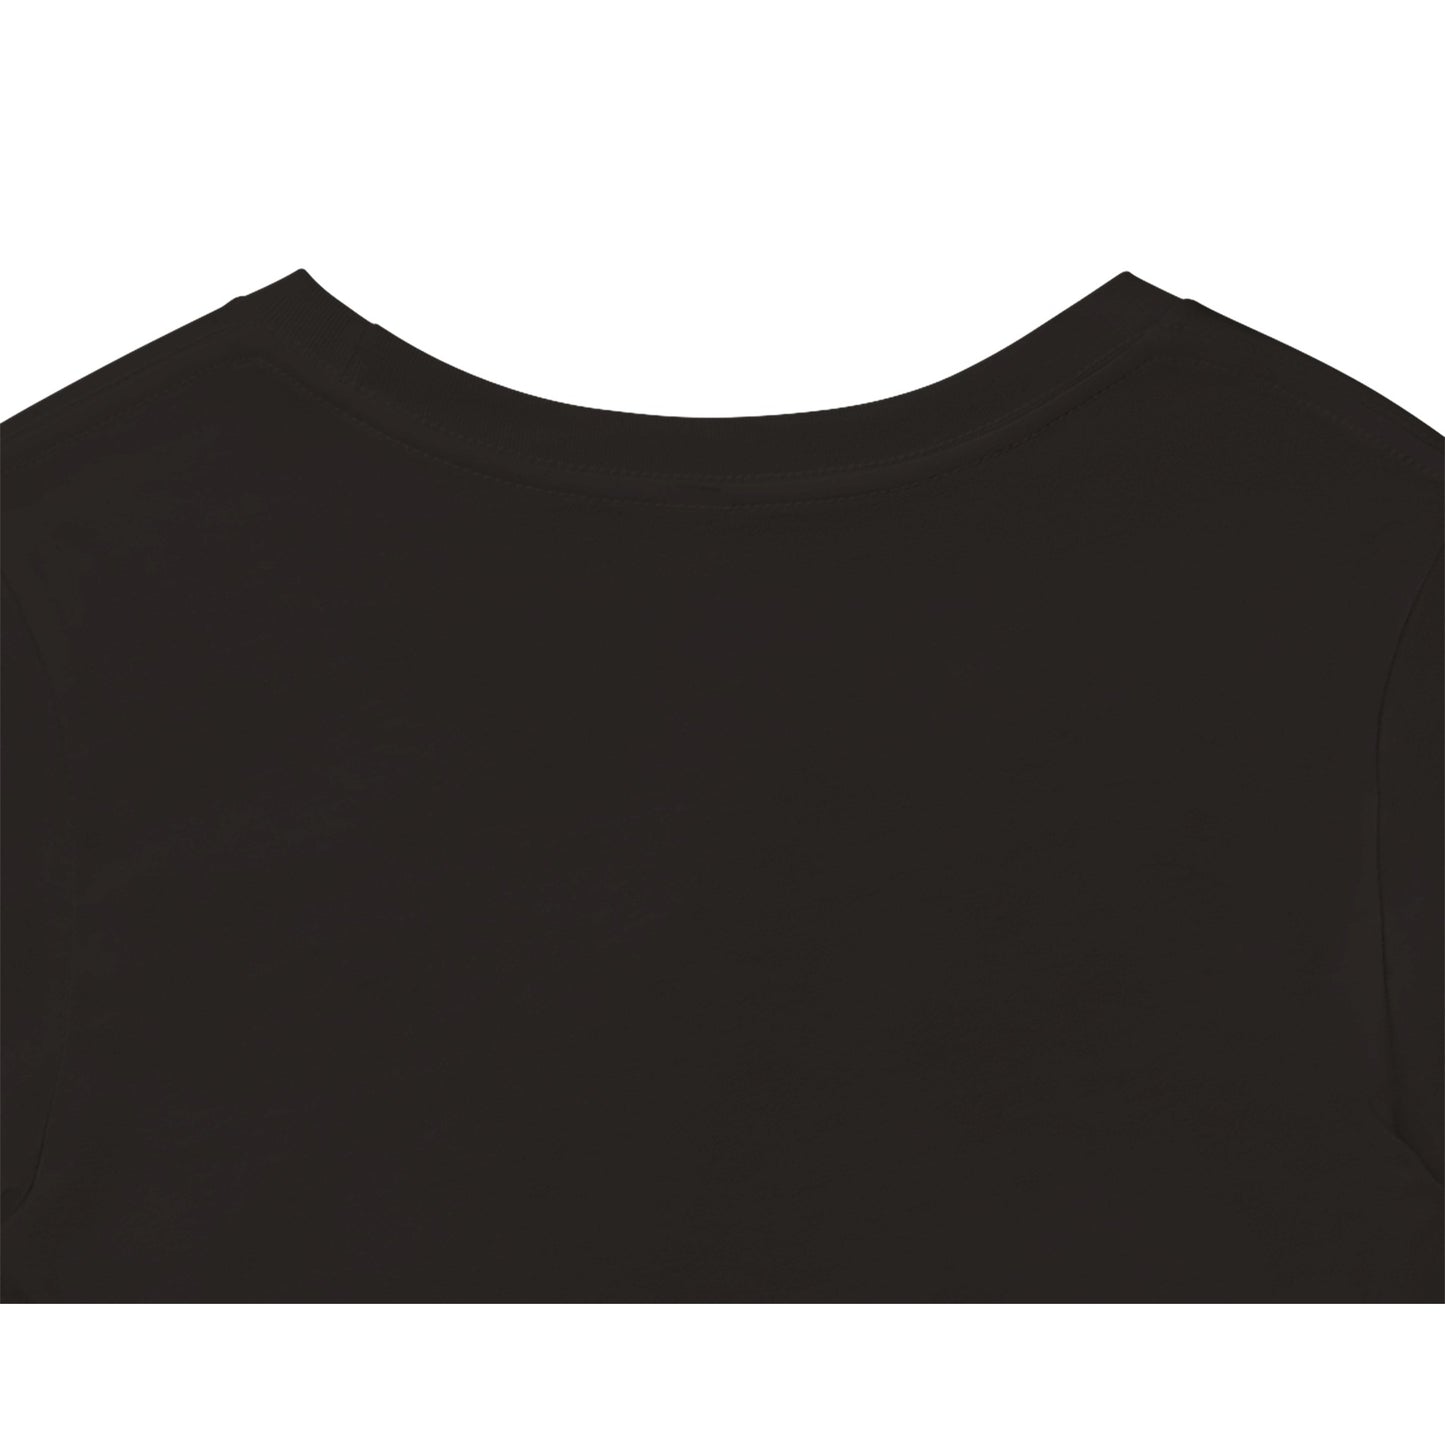 Morph Market (Rainbow Circles) - Premium Womens Crewneck T-shirt